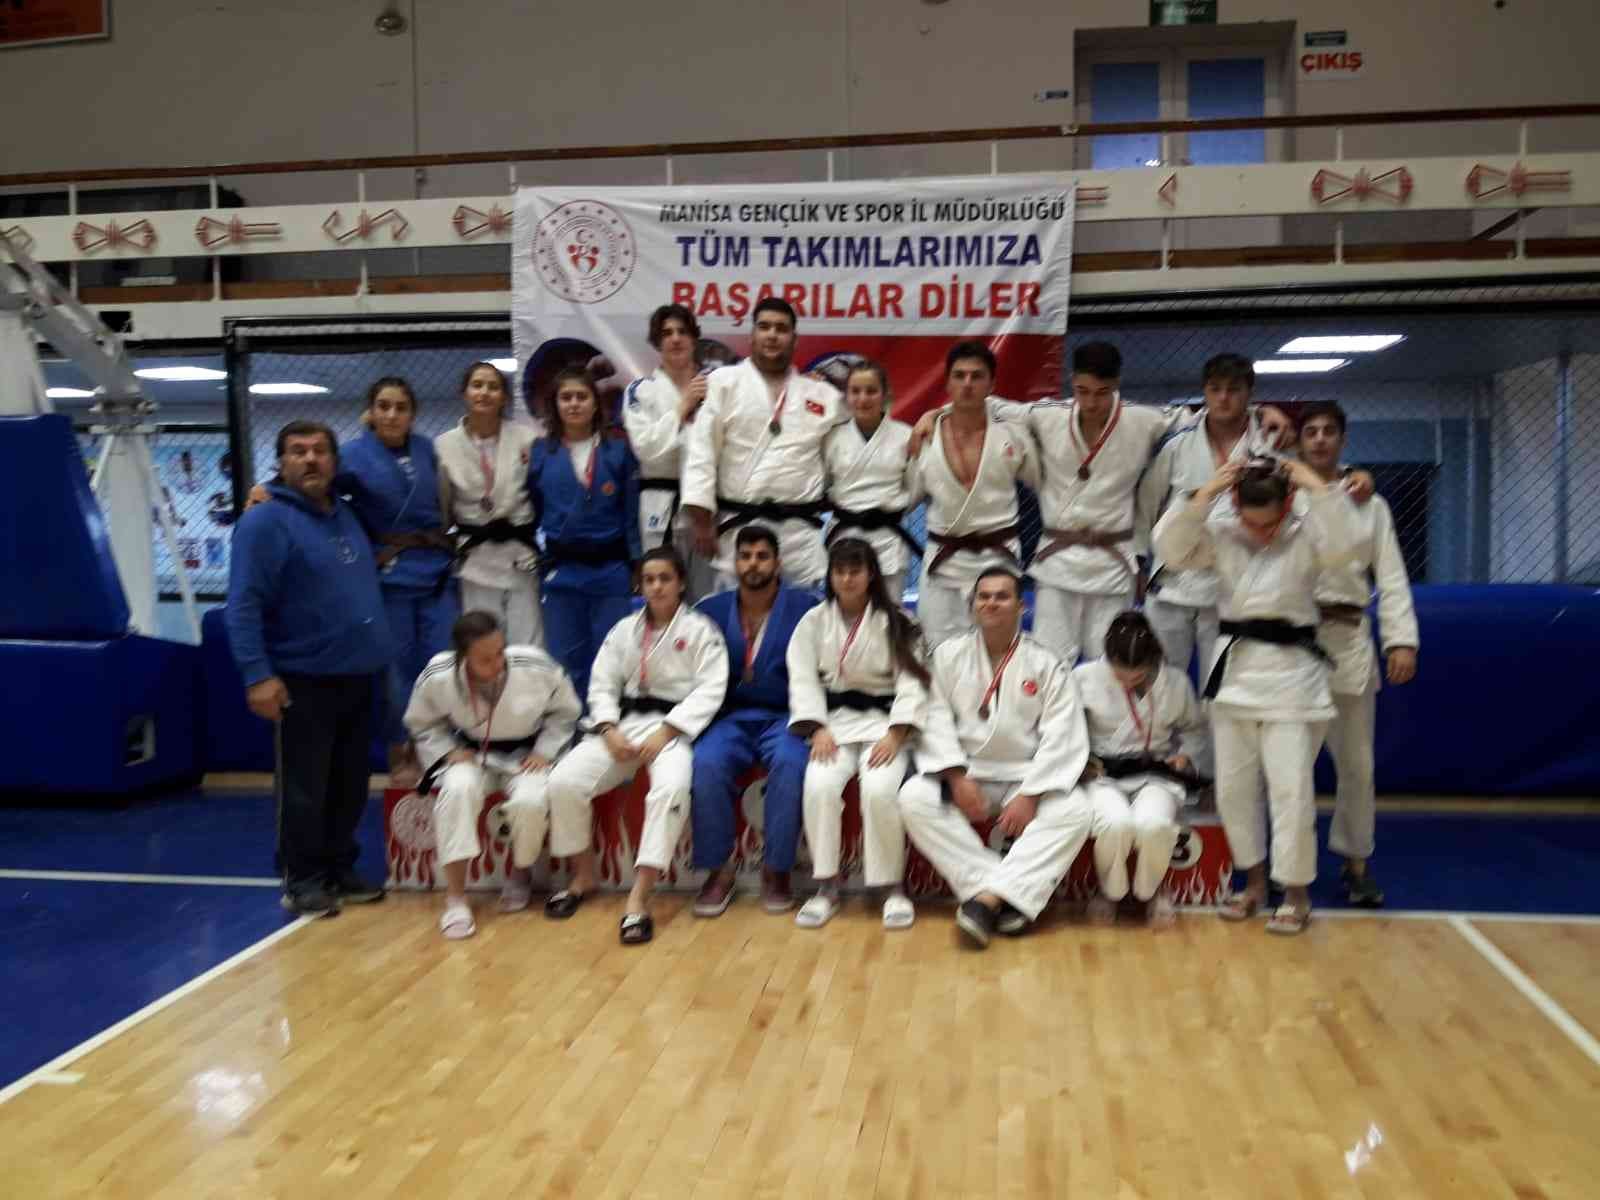 Yunusmereli judocular 18 madalyayla Ankara biletini aldı #manisa